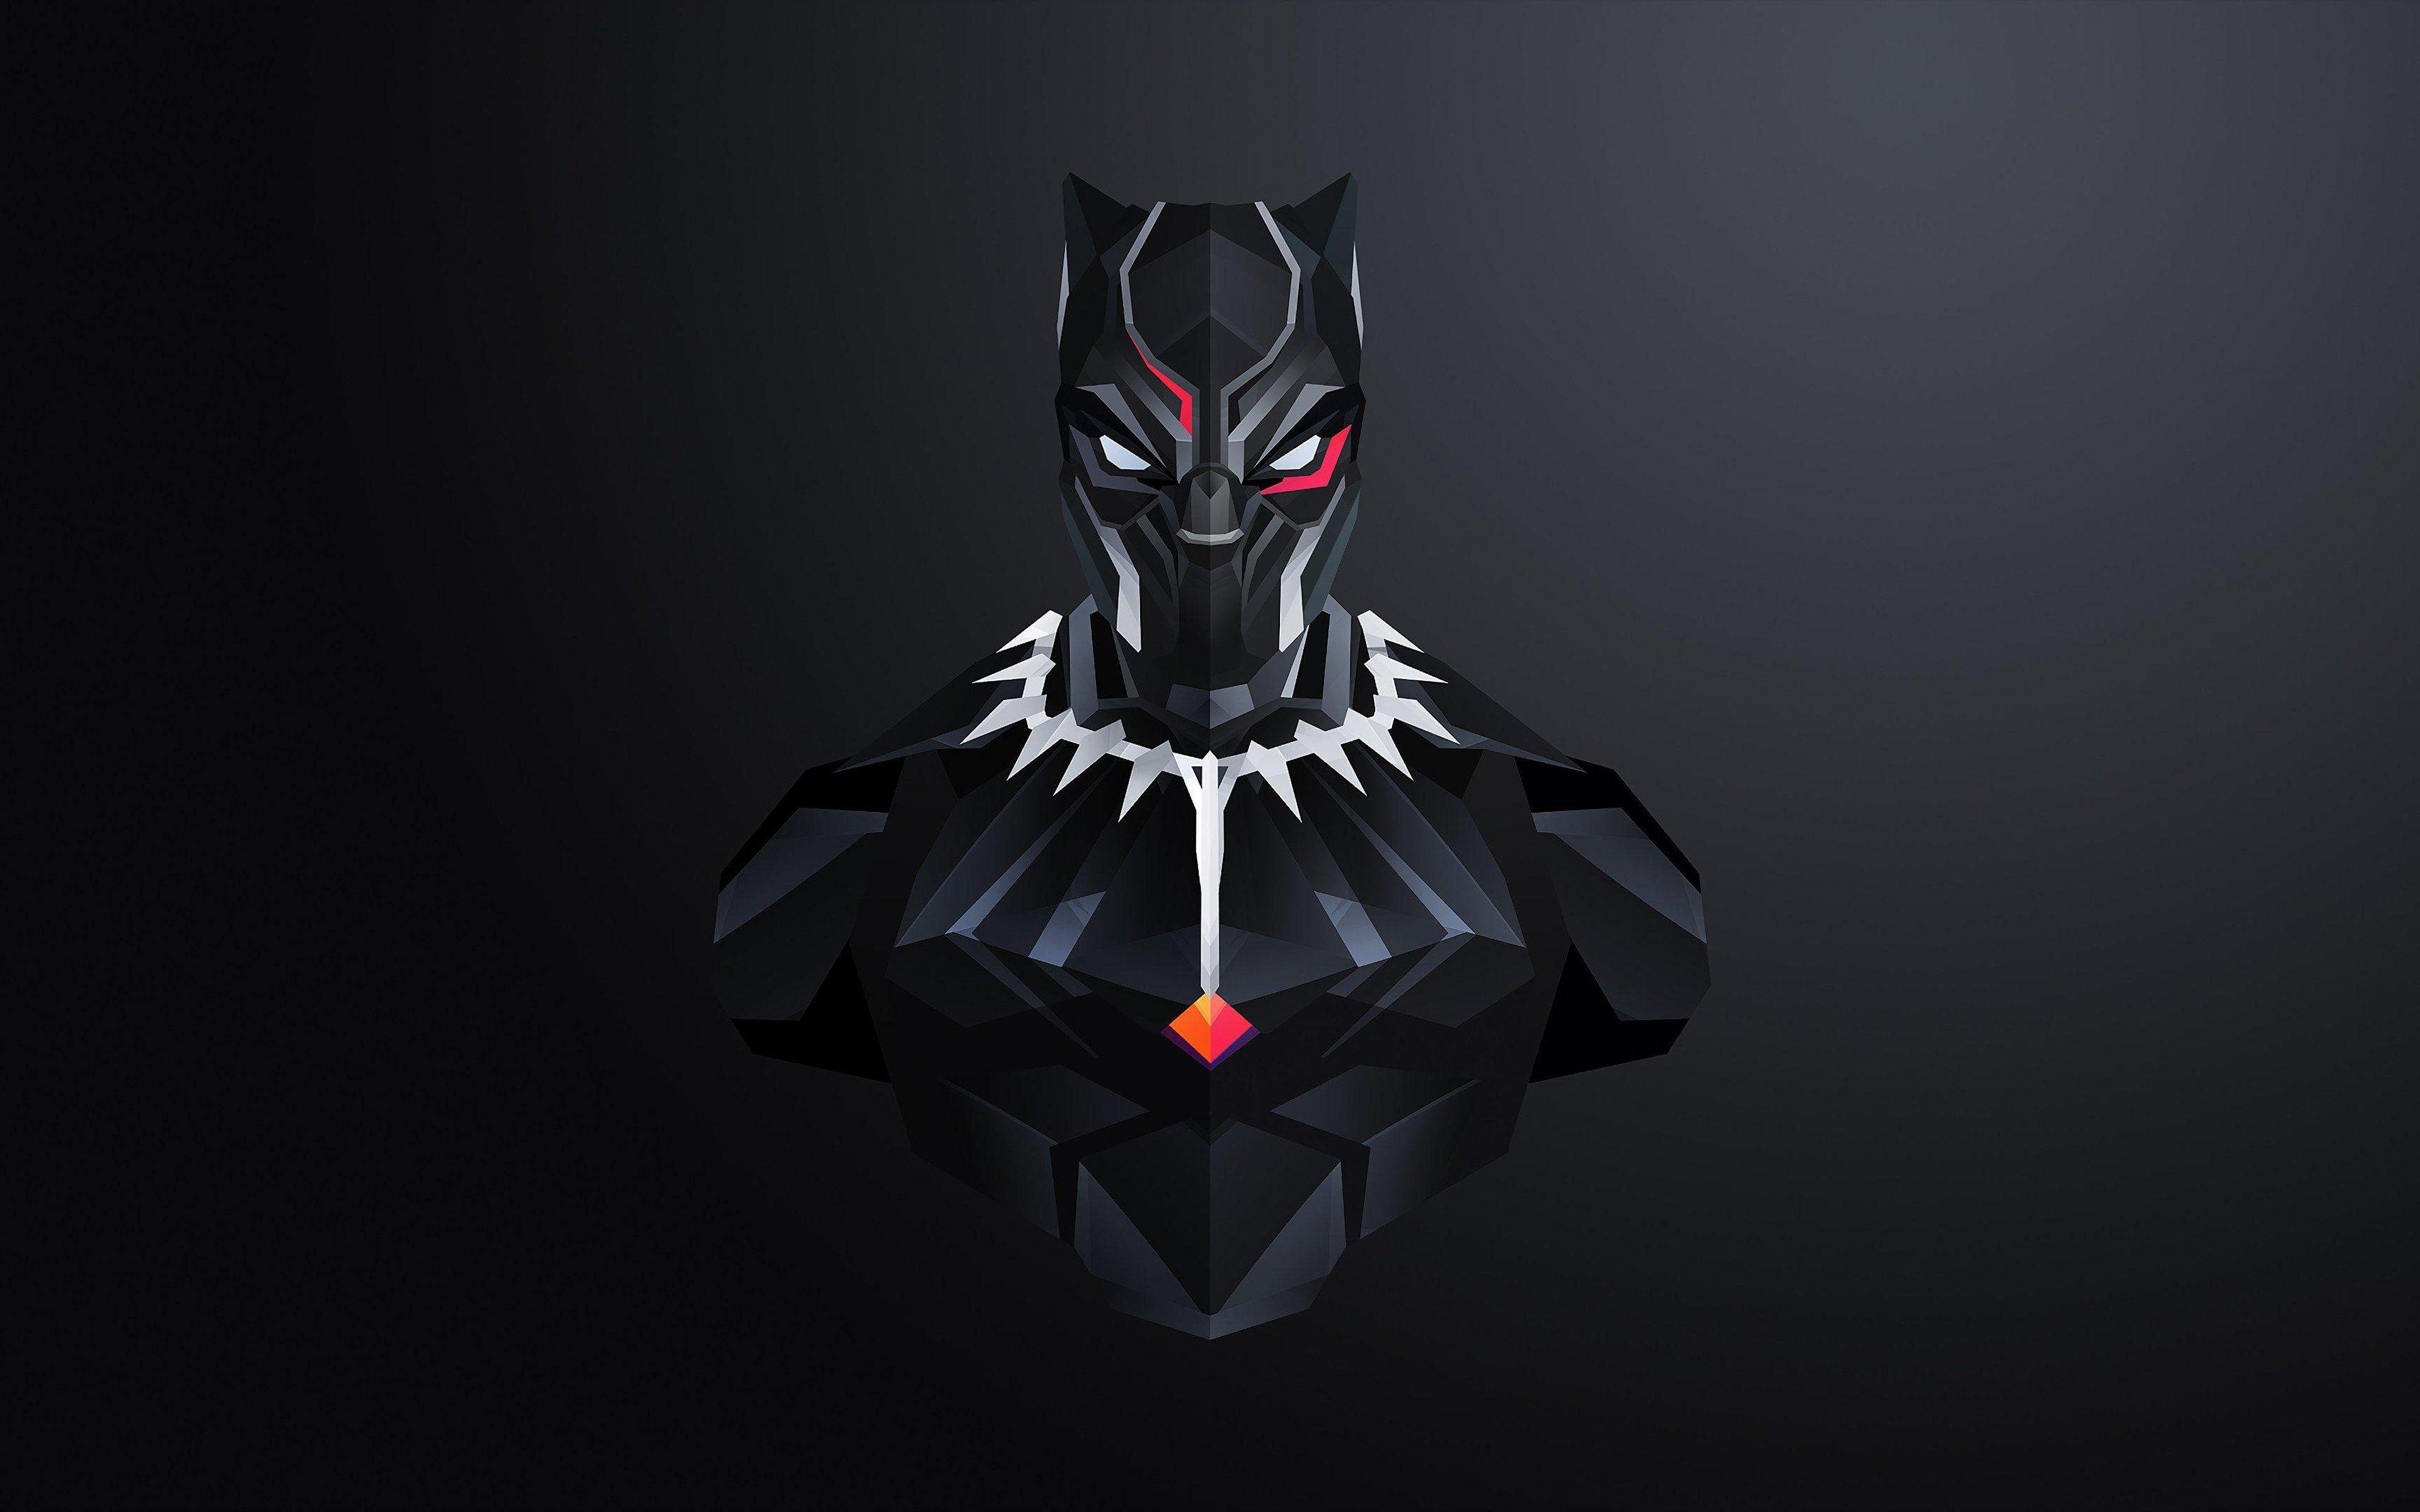  Black  Panther  4K  Ultra  HD Dark Wallpapers  Top Free Black  